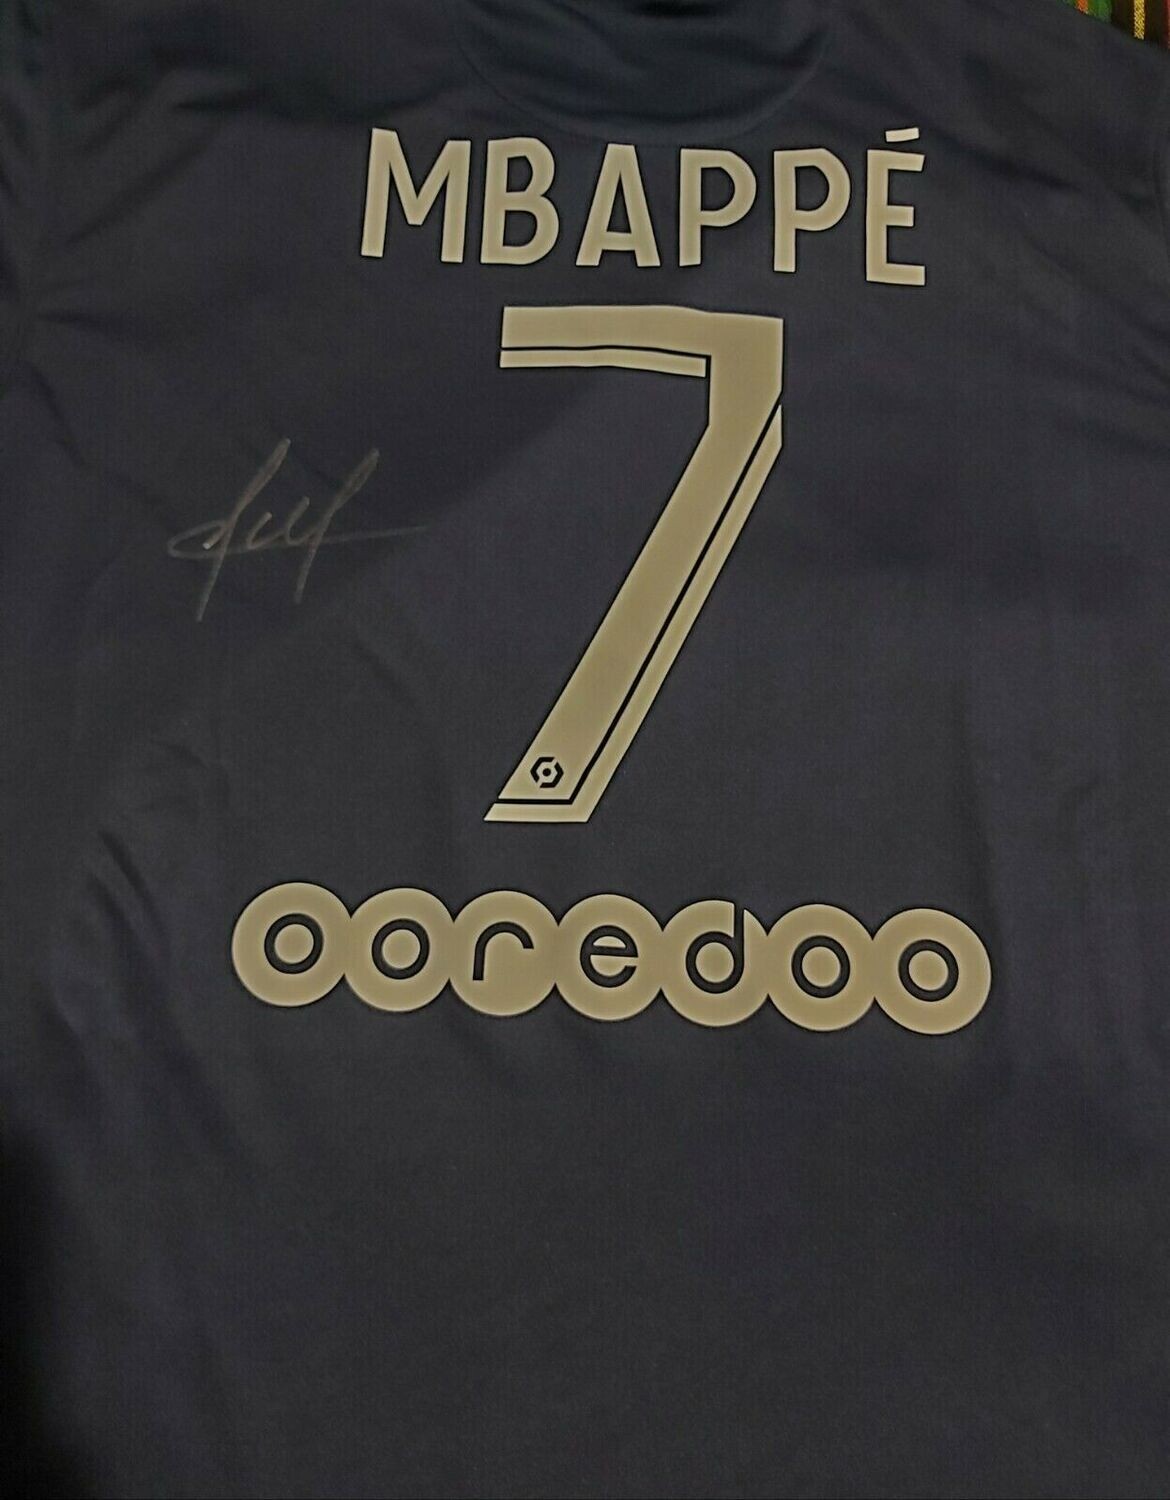 MAGLIA PARIS ST GERMAIN 2021 2022 Autografata MBAPPE 7 Signed MBAPPE 7 Signed with COA certificate of authenticity Autograph Mbappe 7